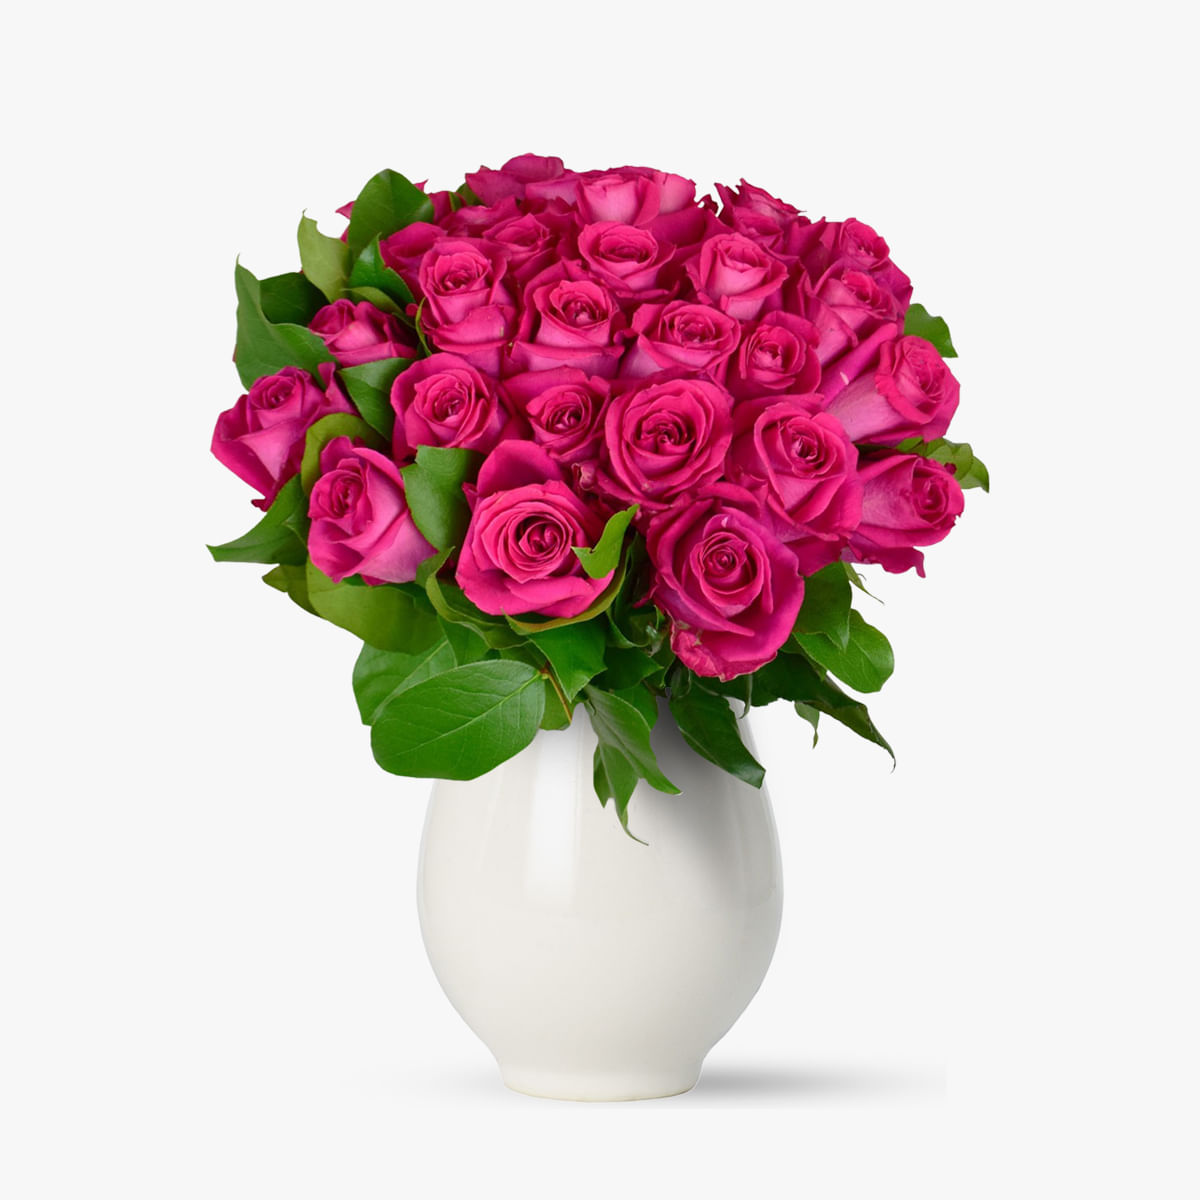 Buchet de 27 trandafiri roz – Standard Buchet